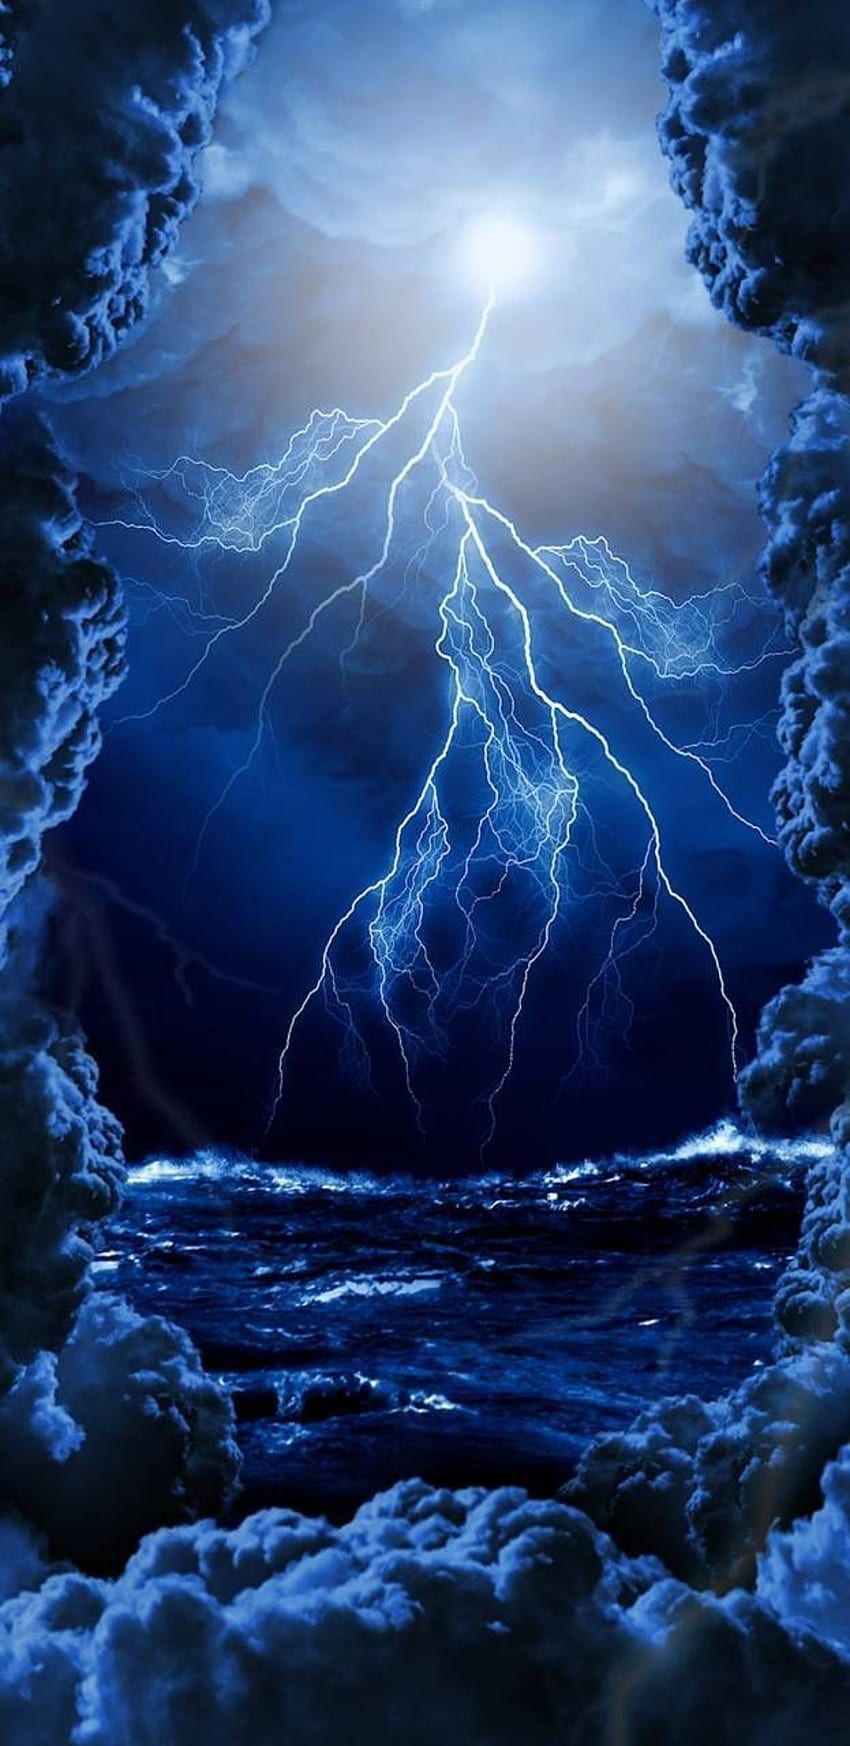 Lightning strikes the ocean during a stormy night - Lightning, storm